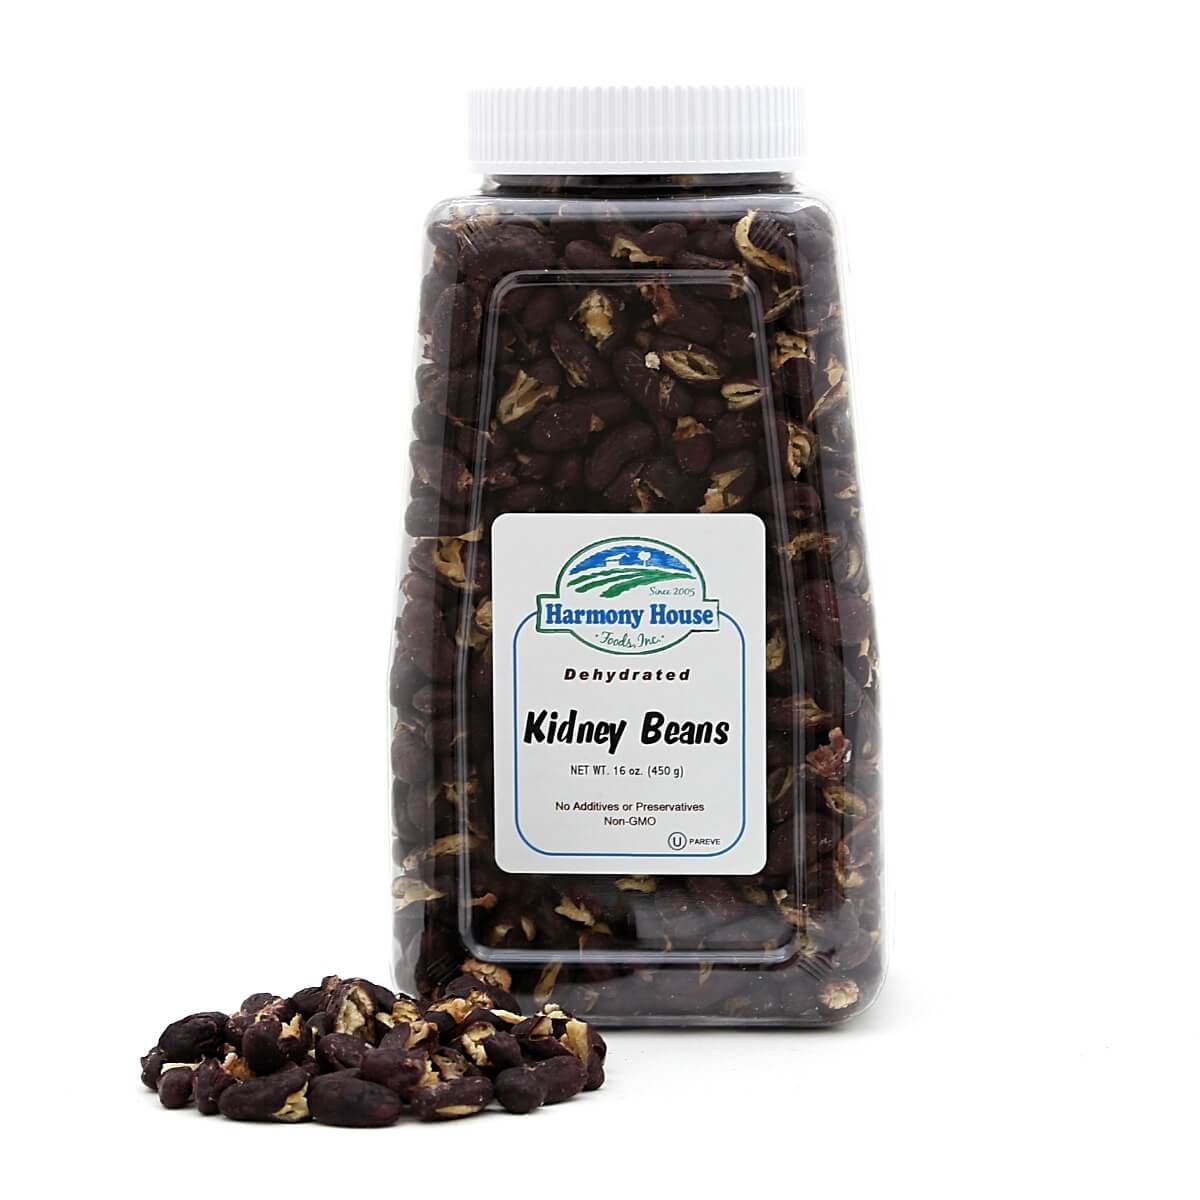 A jar of black beans.
Keywords: Harmony House Dark Kidney Beans.